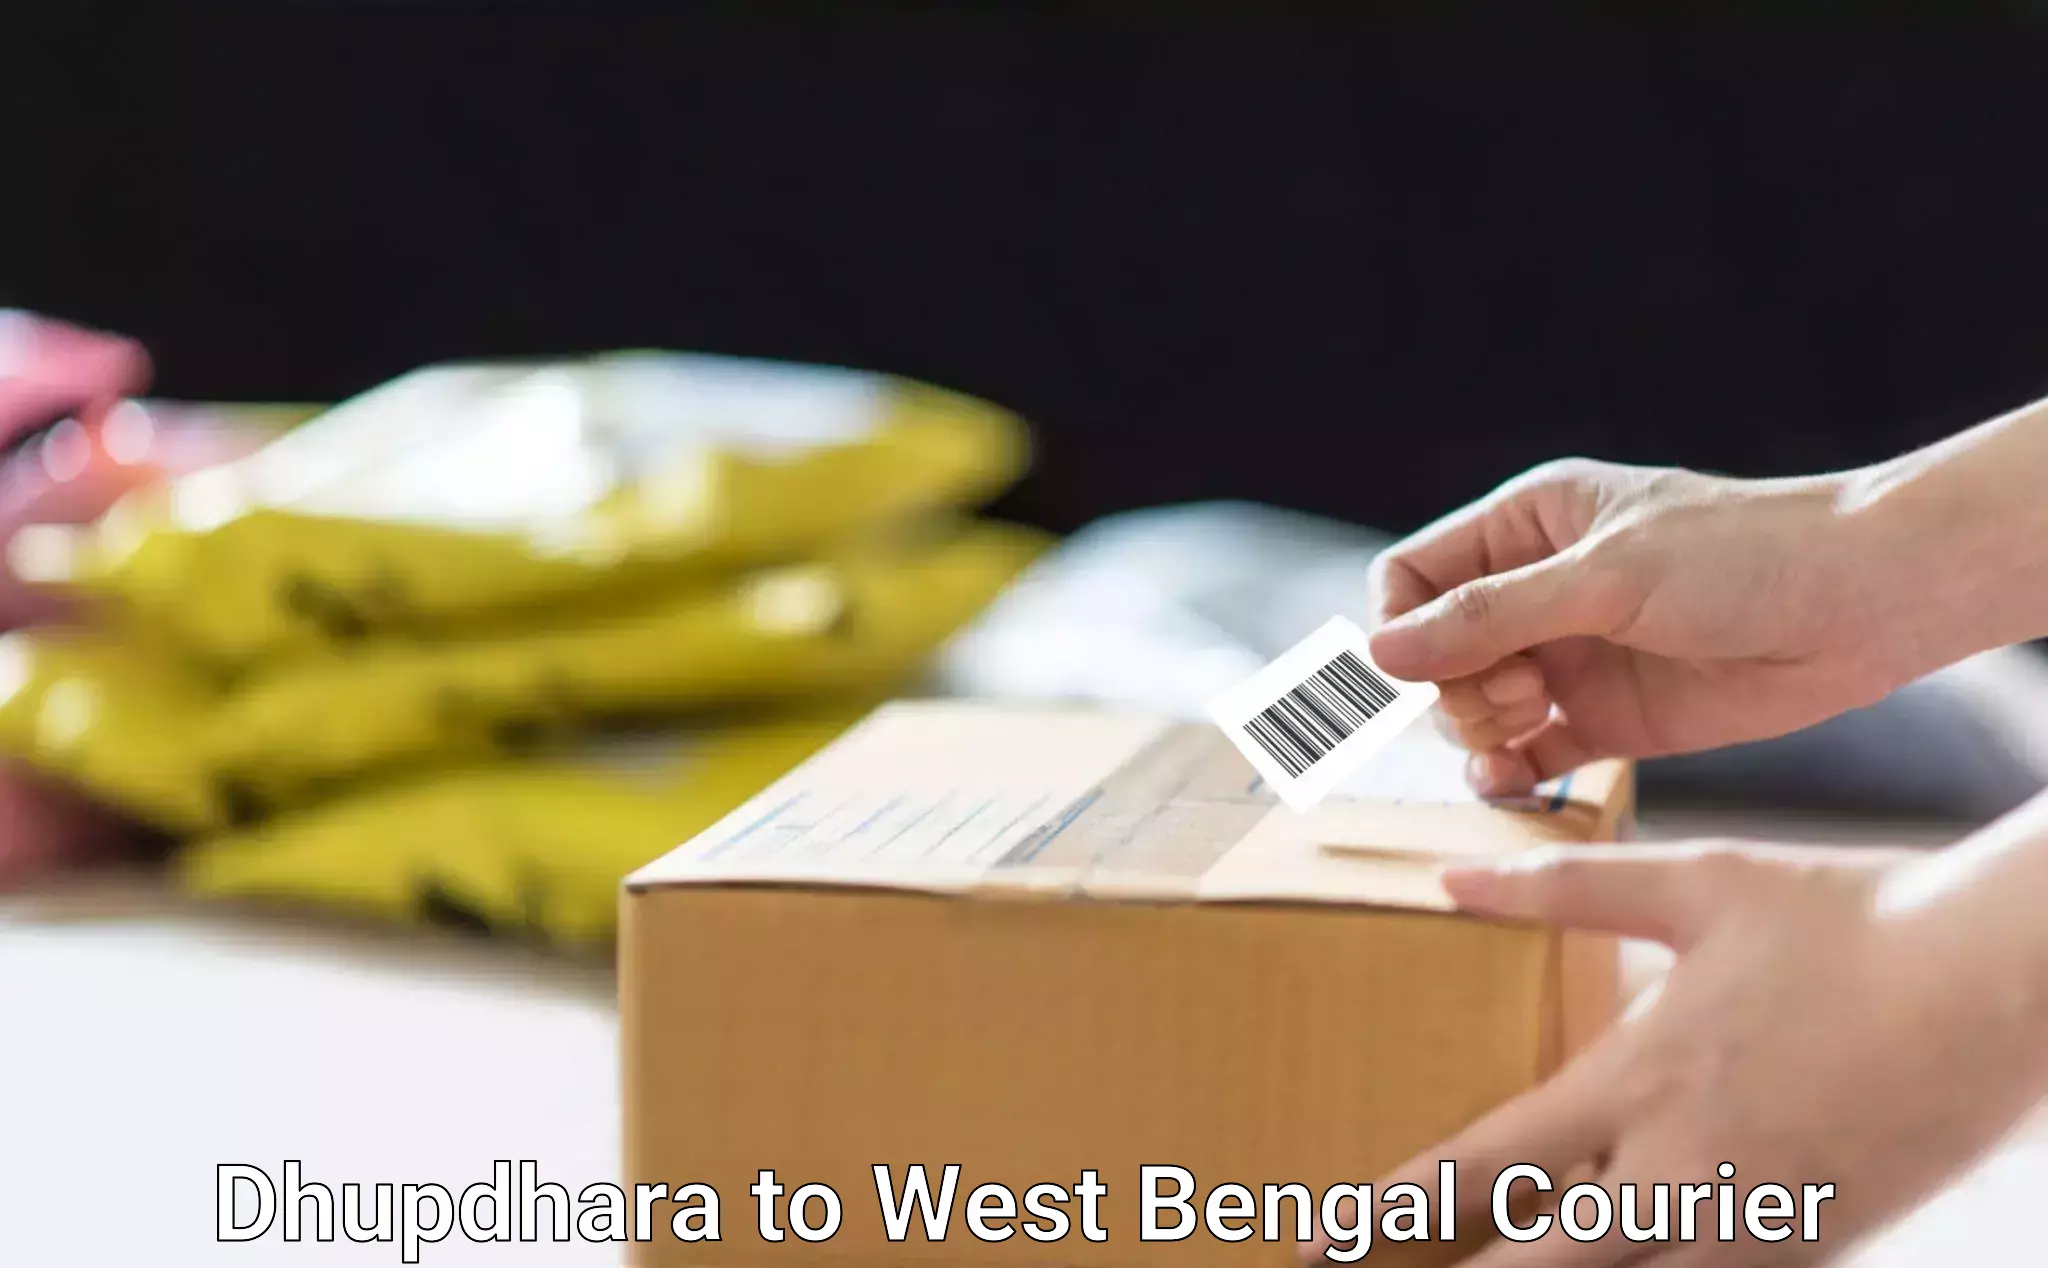 Custom courier packaging Dhupdhara to Kumargram